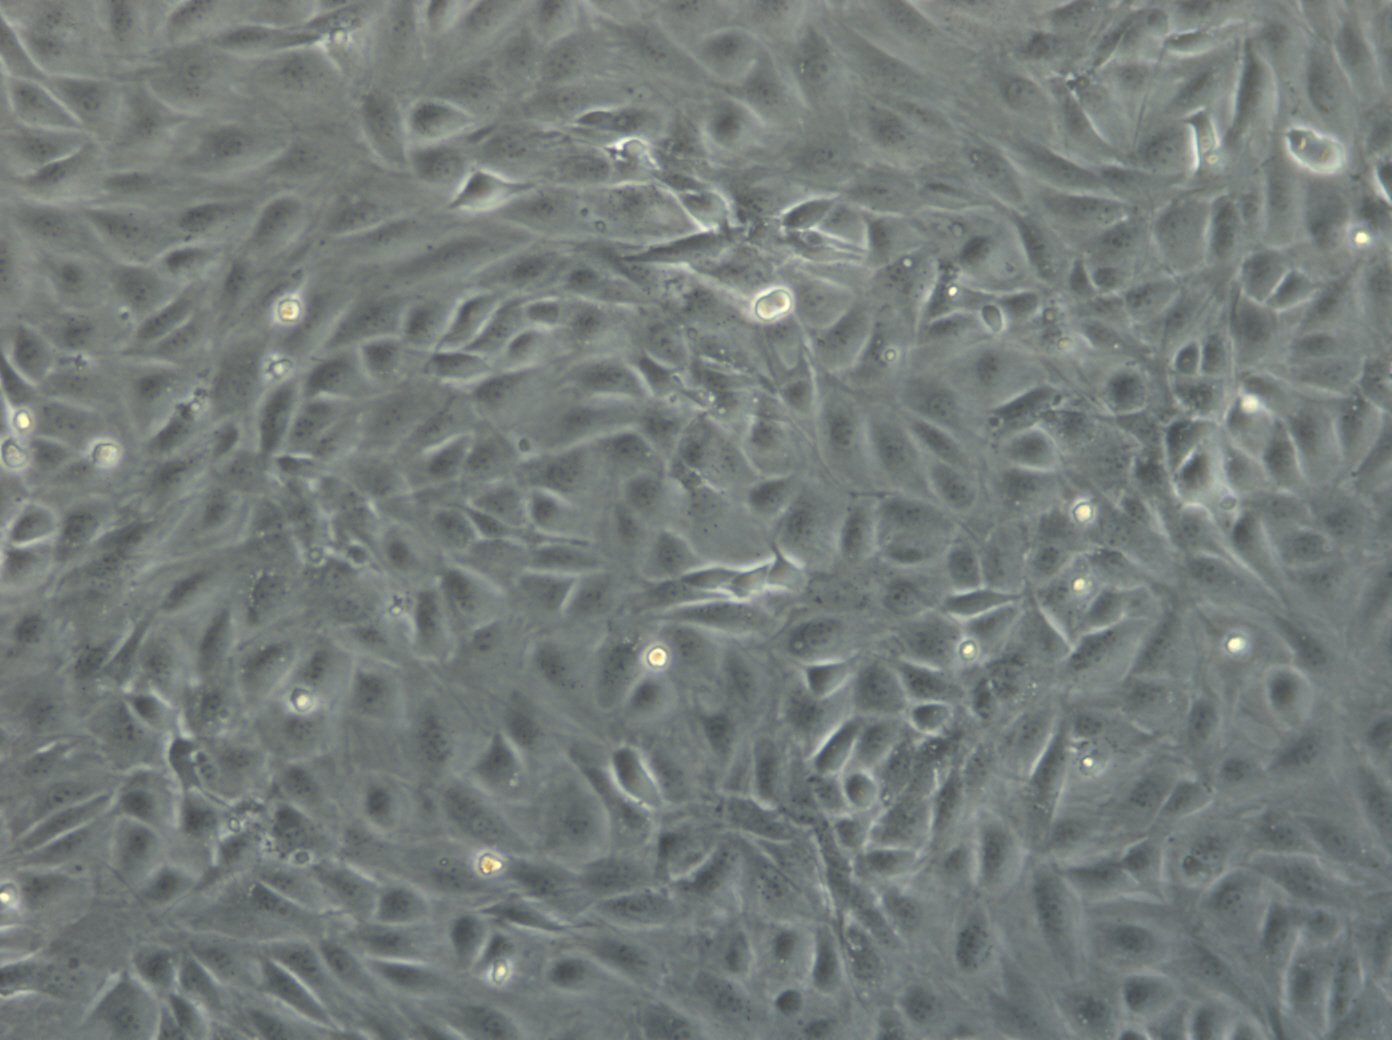 NIH-3T3 Cells